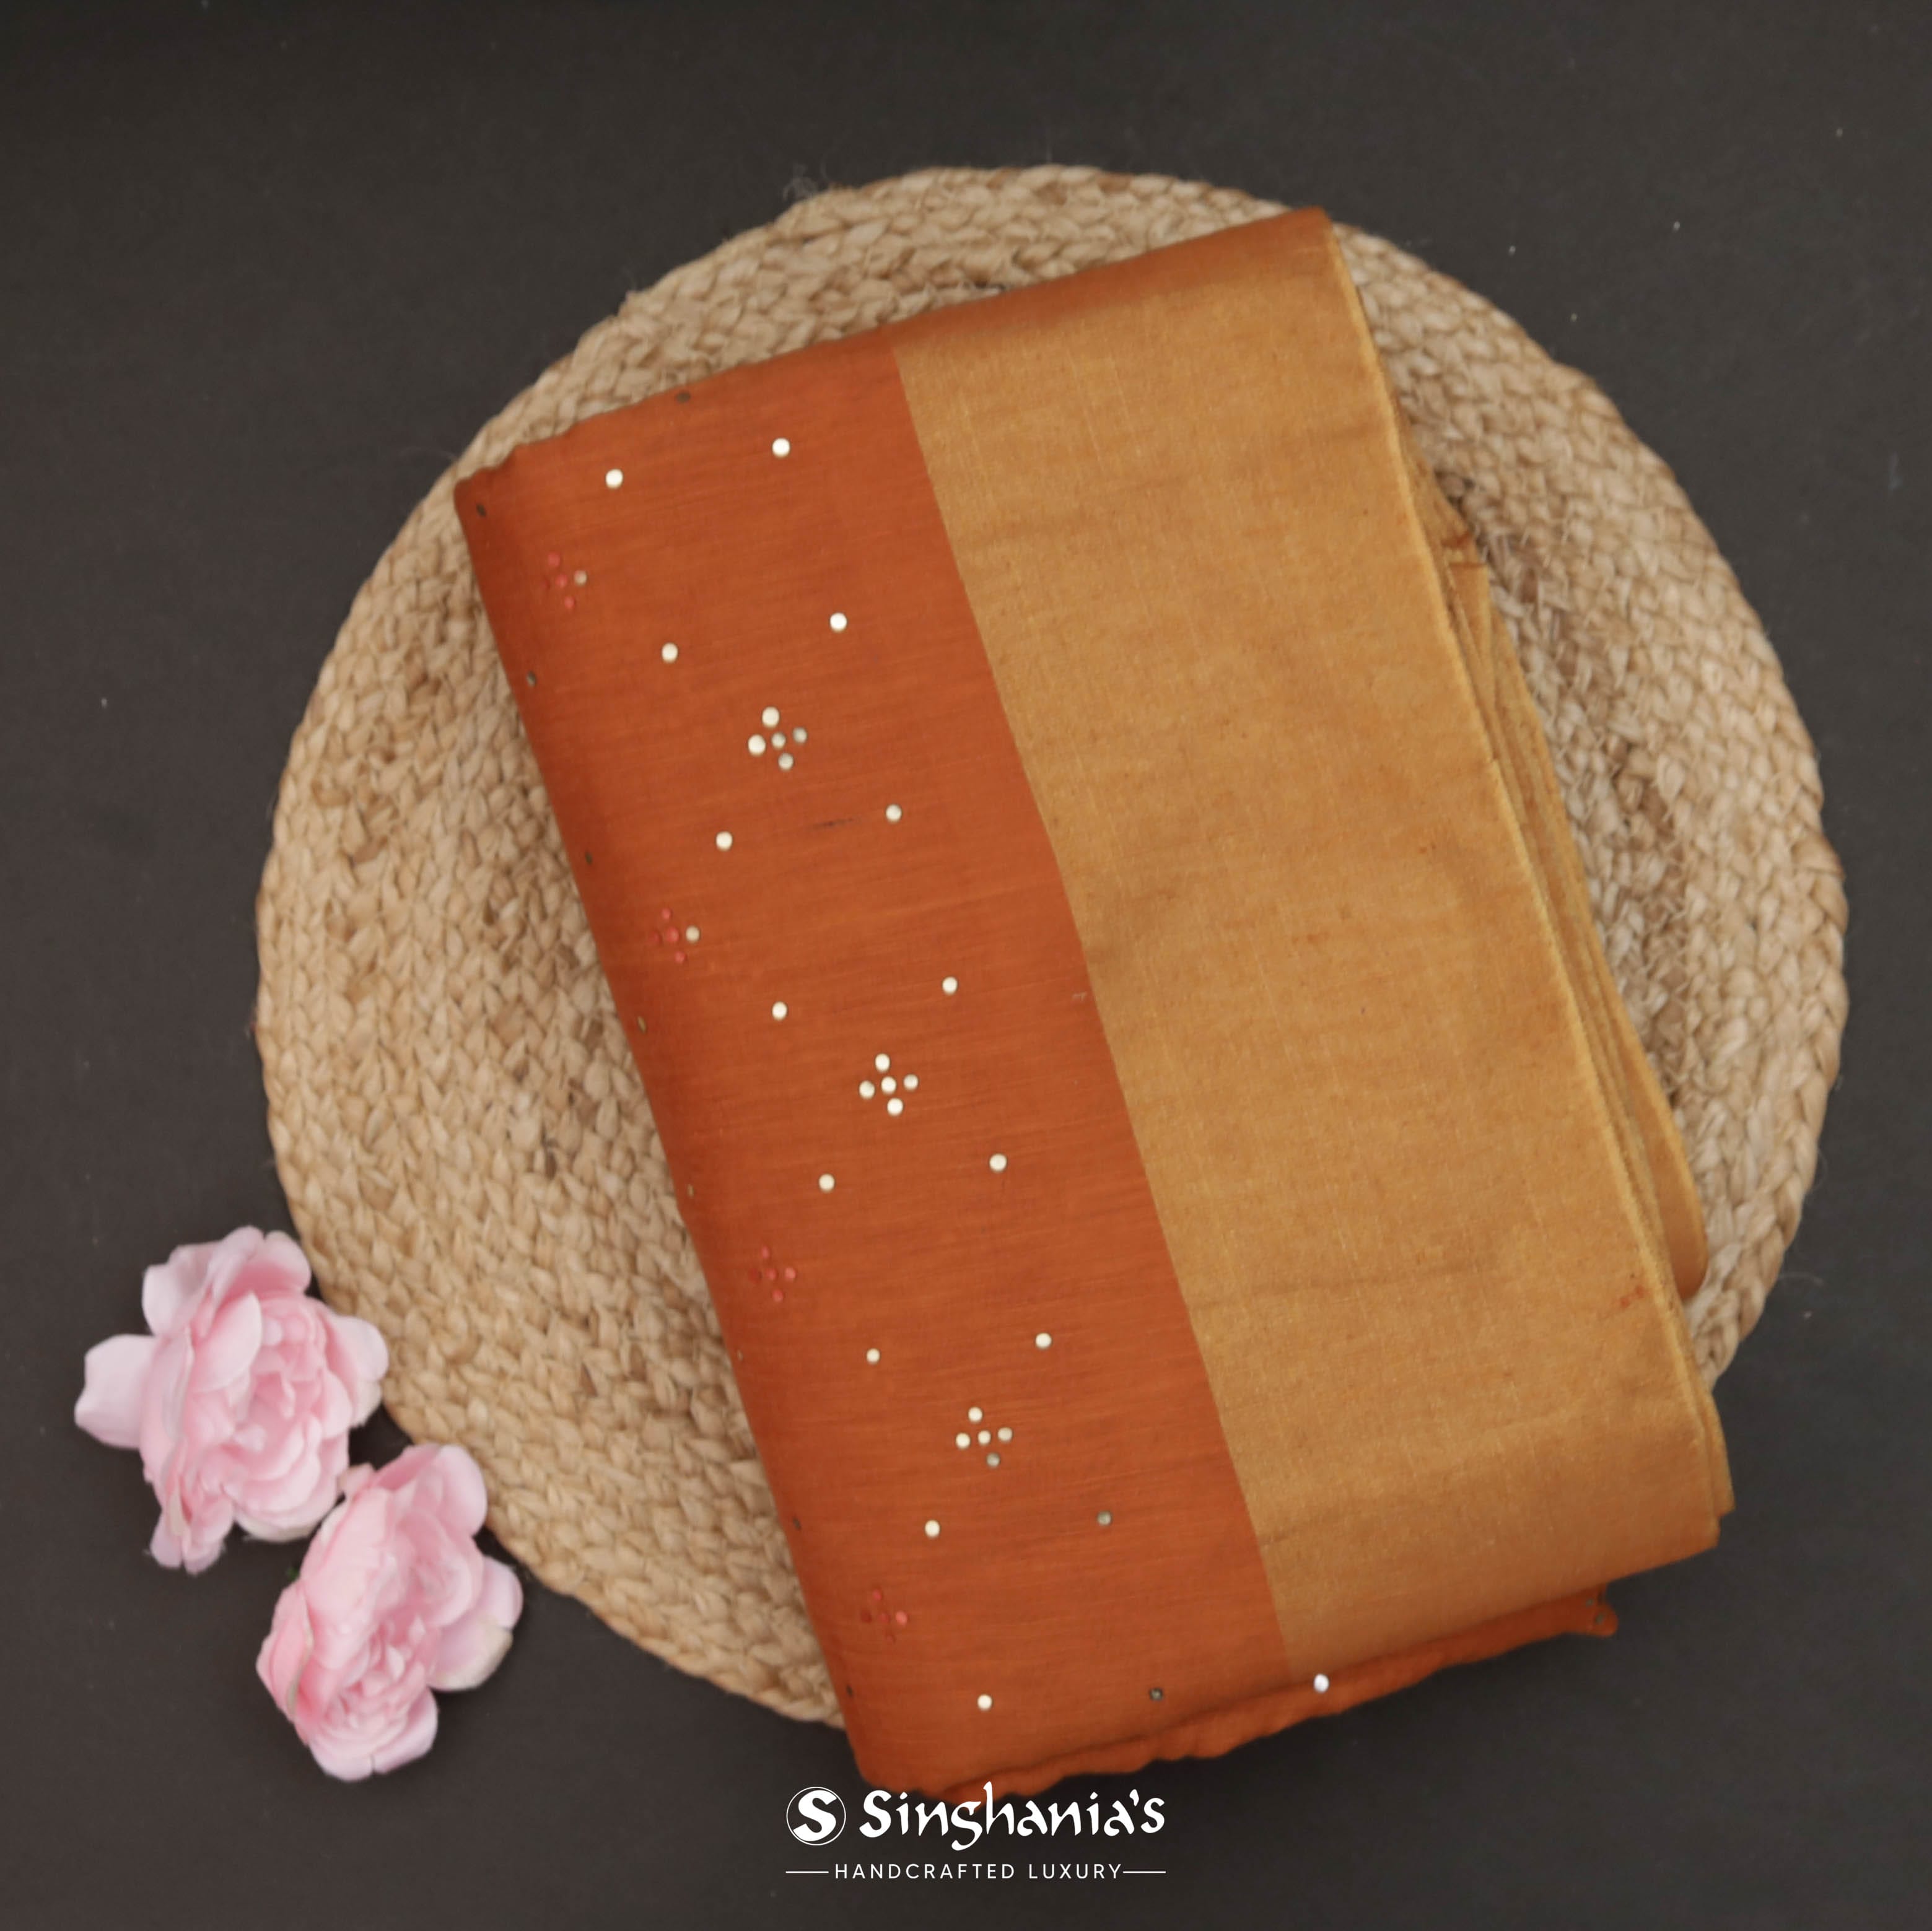 Marmalade Orange Linen Printed Handloom Saree With Foil Print